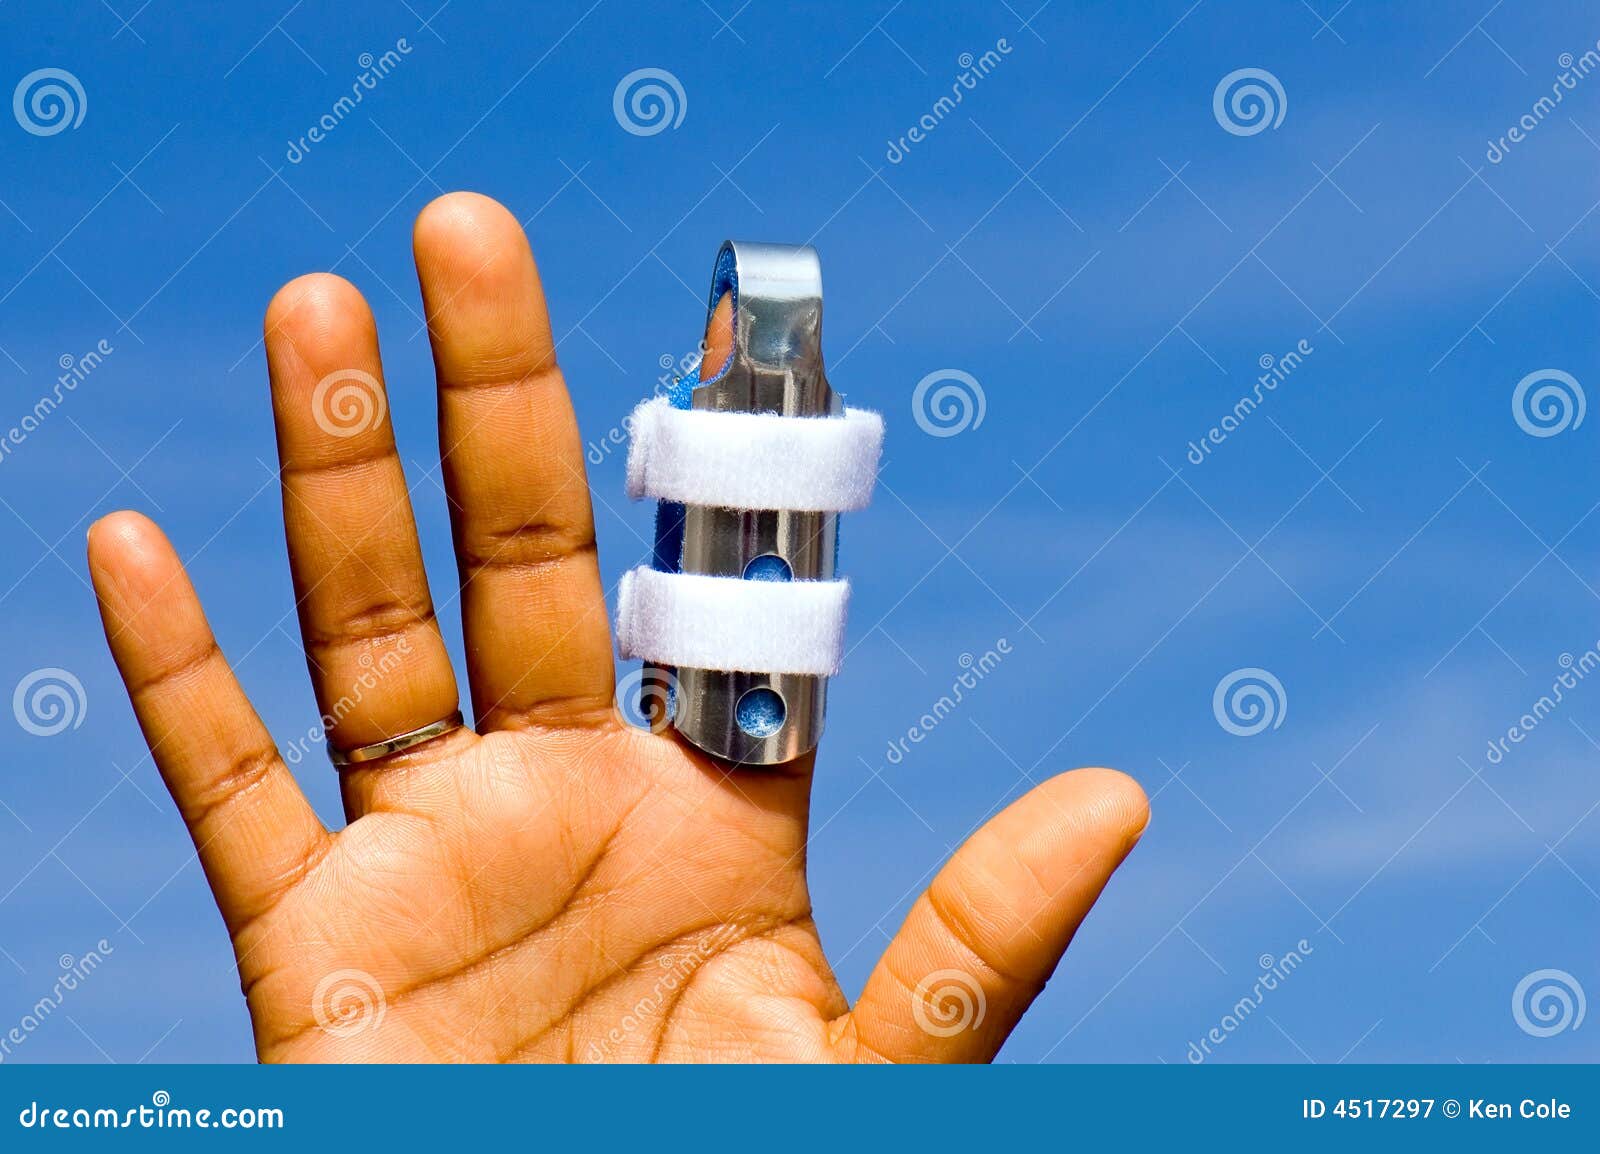 hand with finger in splint